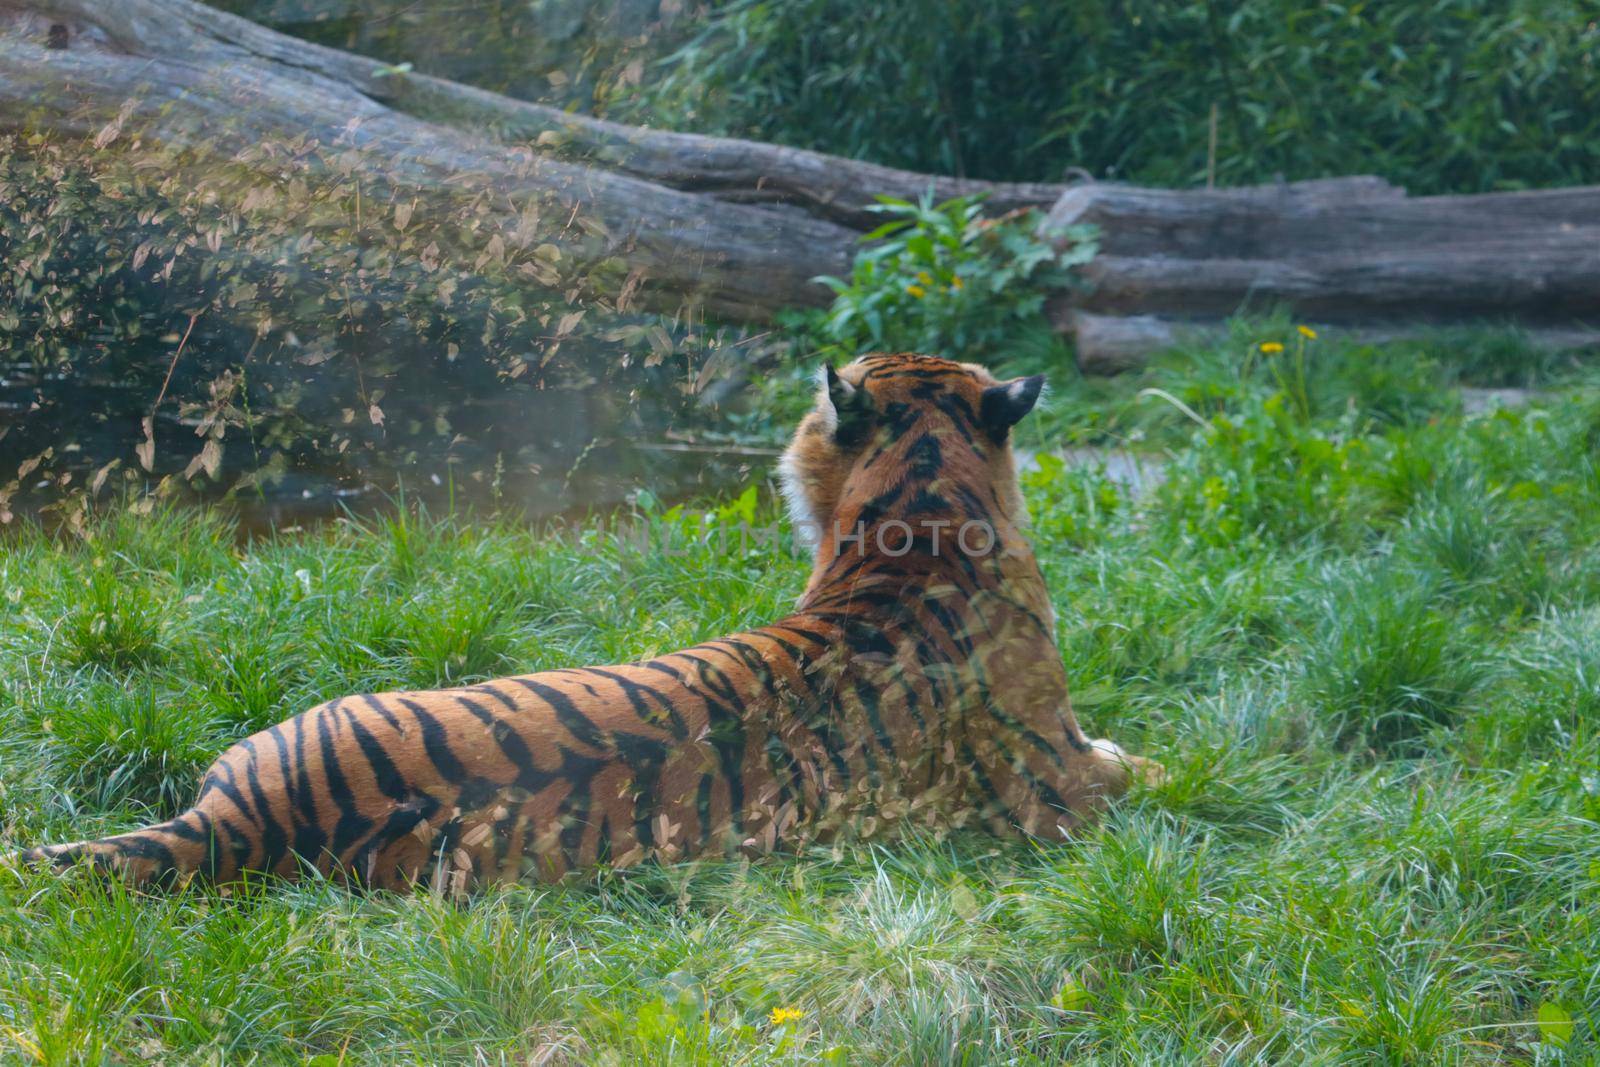 A tiger lies on the grass. Wildcat. Wild animals